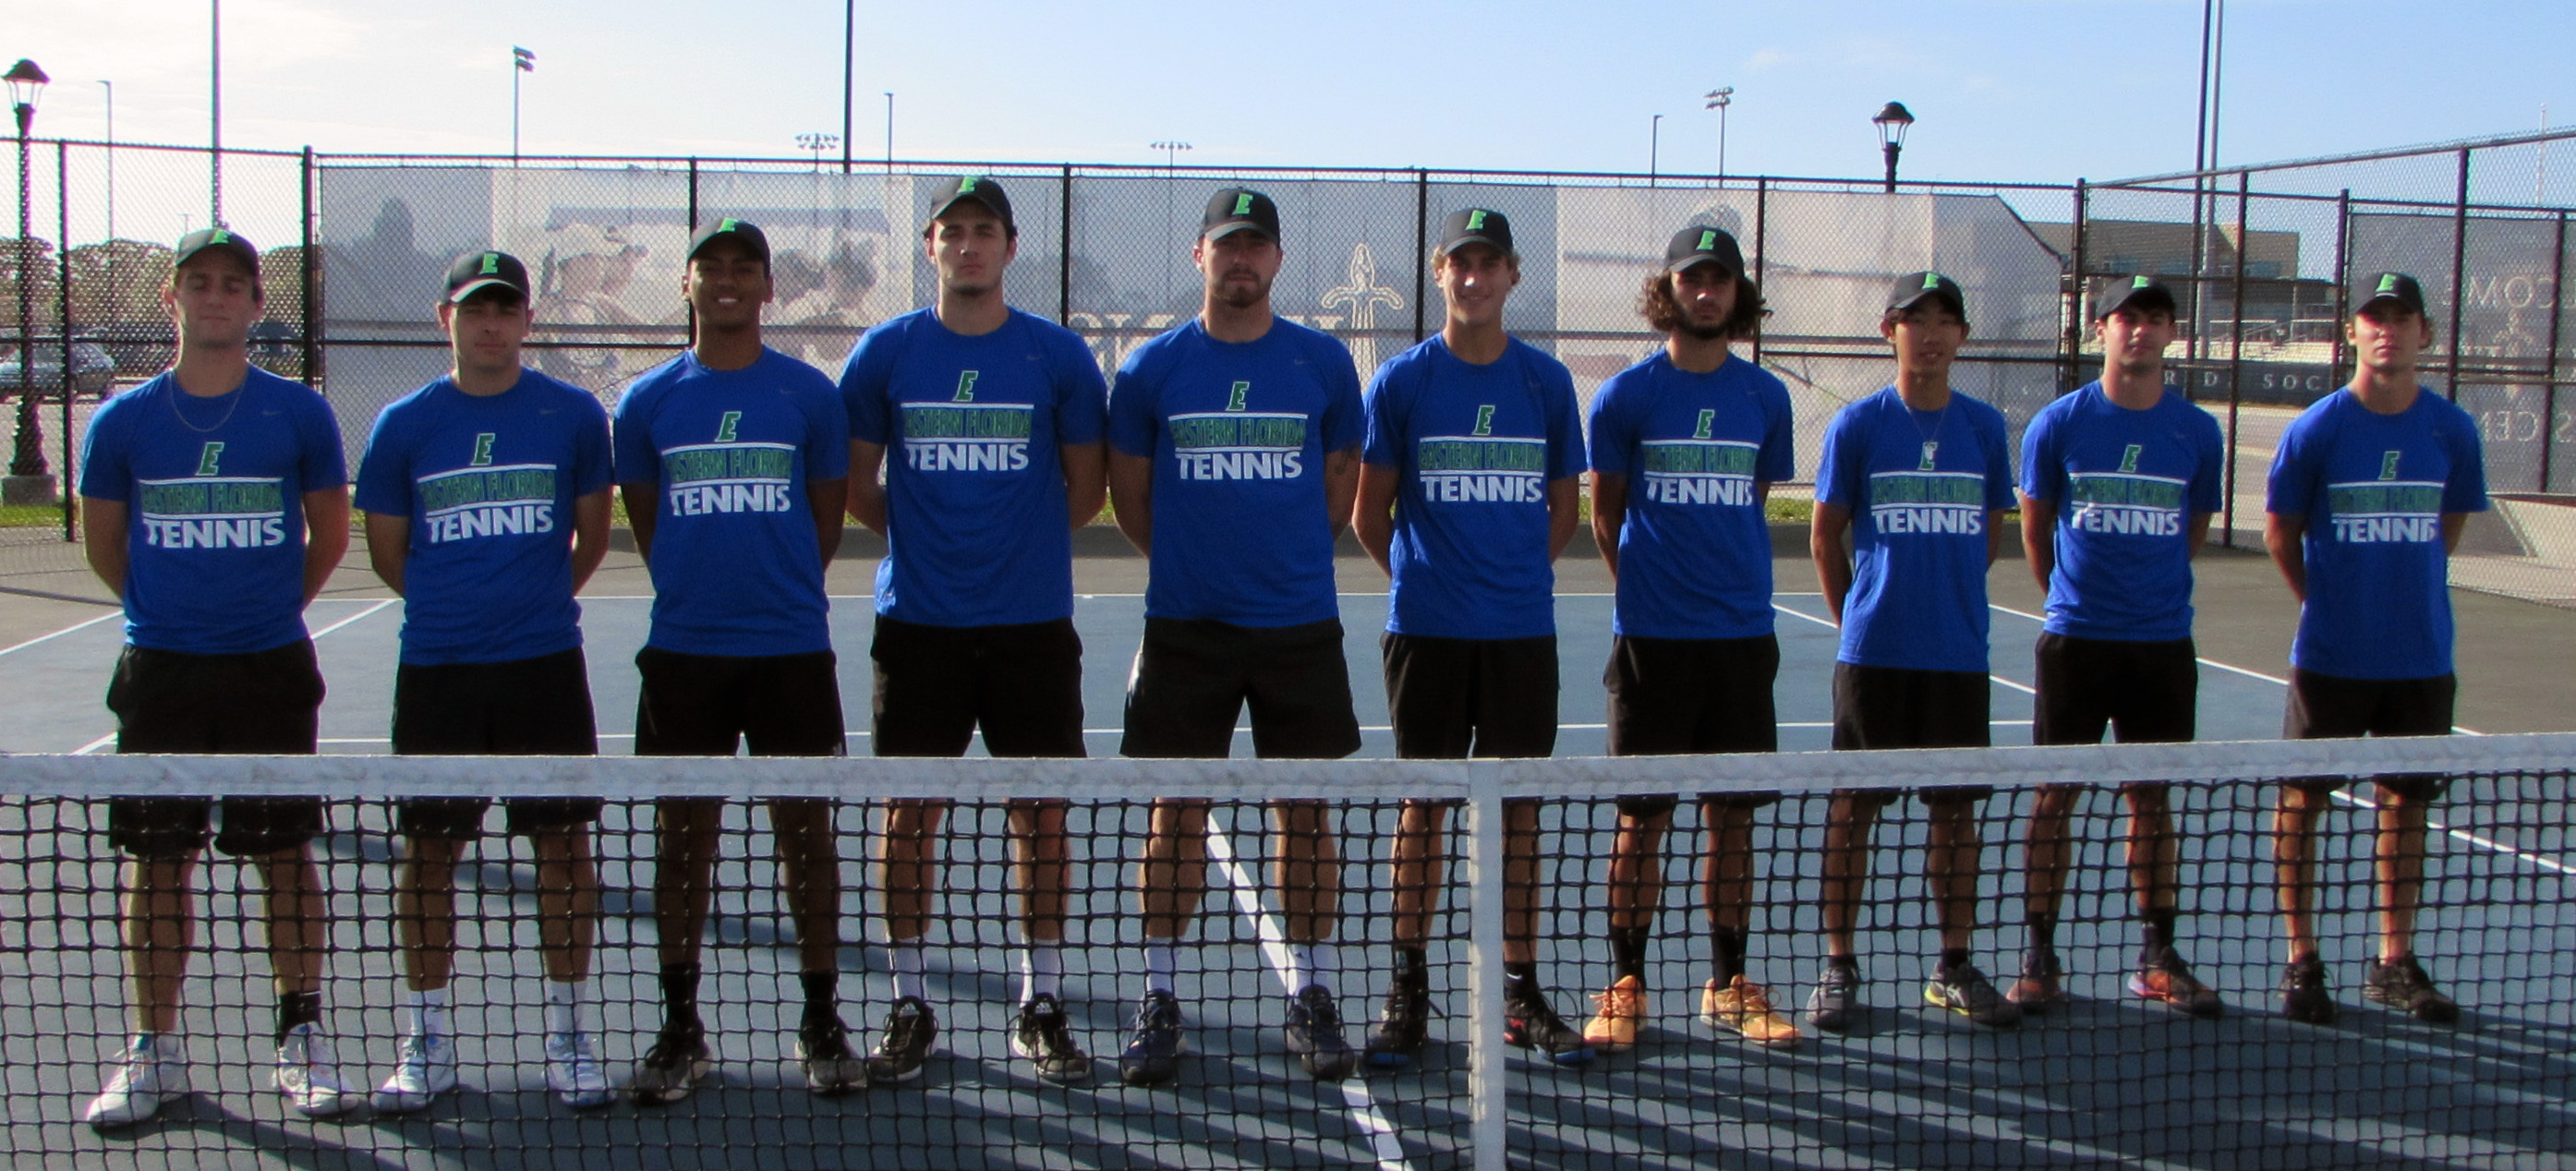 Men's tennis team named to ITA All-Academic Team